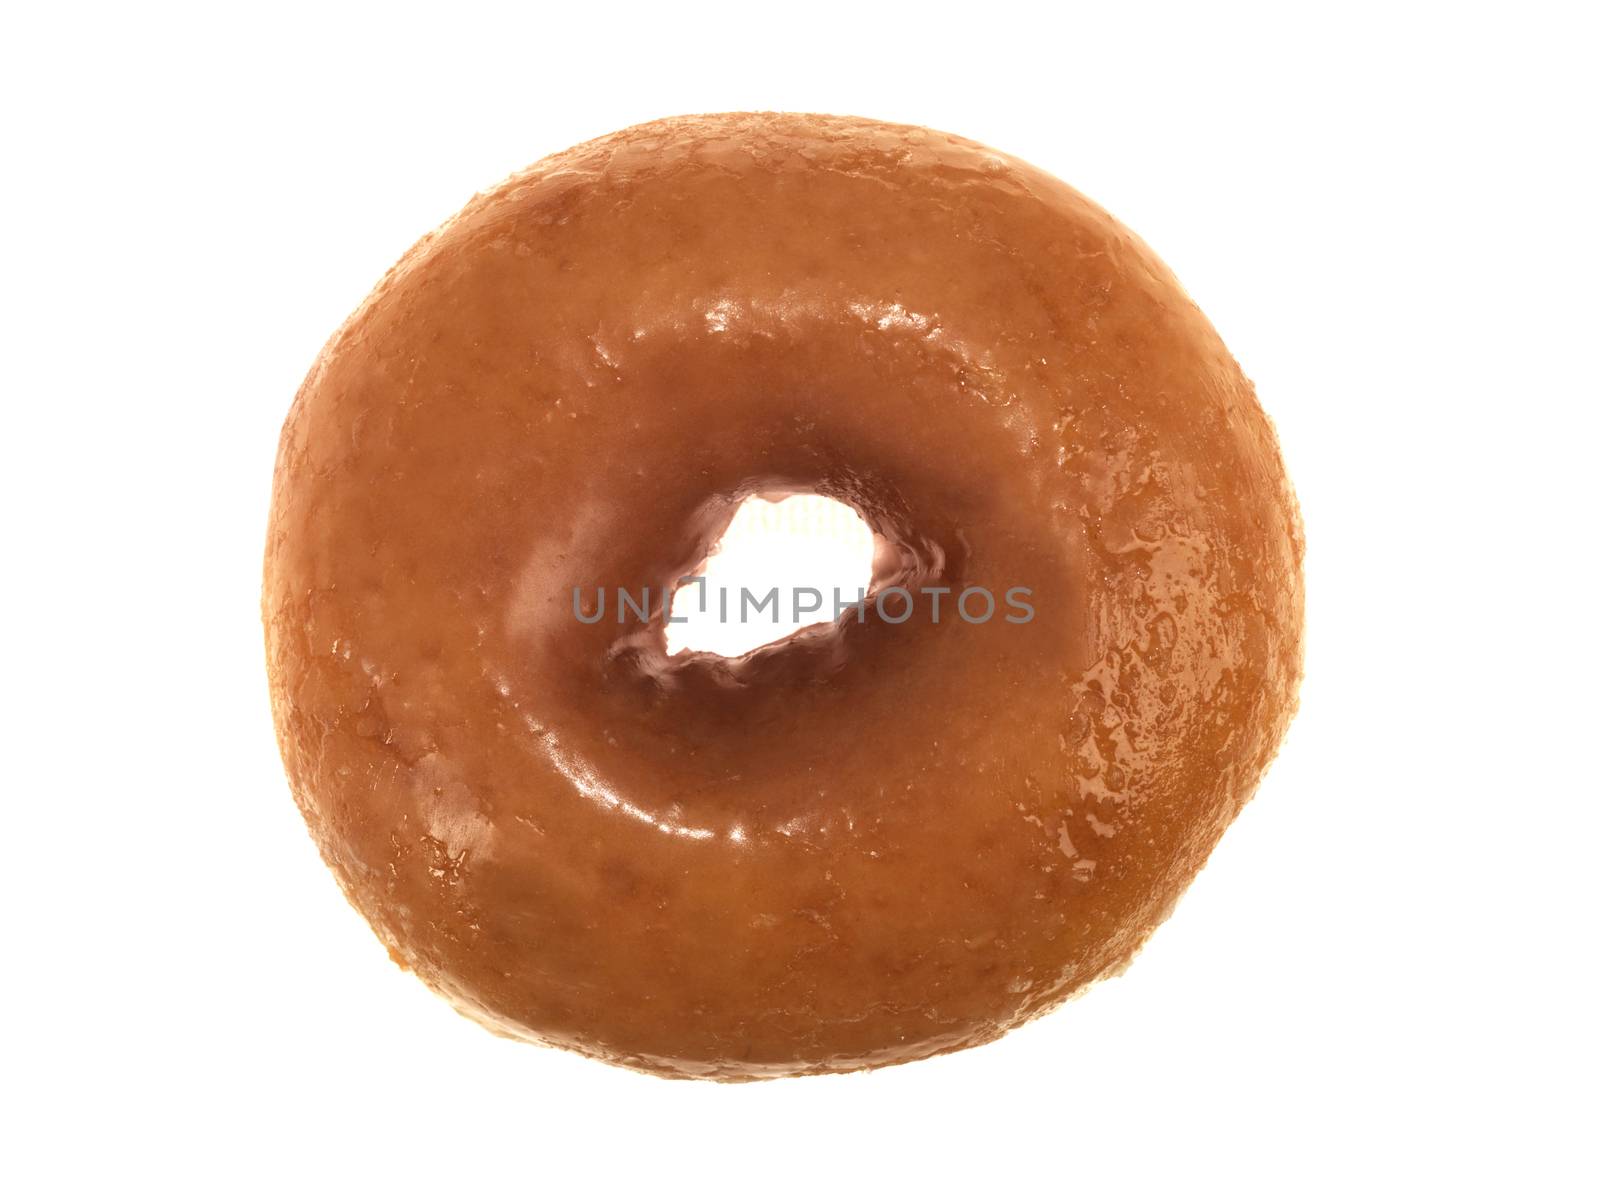 Sugar Glazed Ring Doughnut by Whiteboxmedia